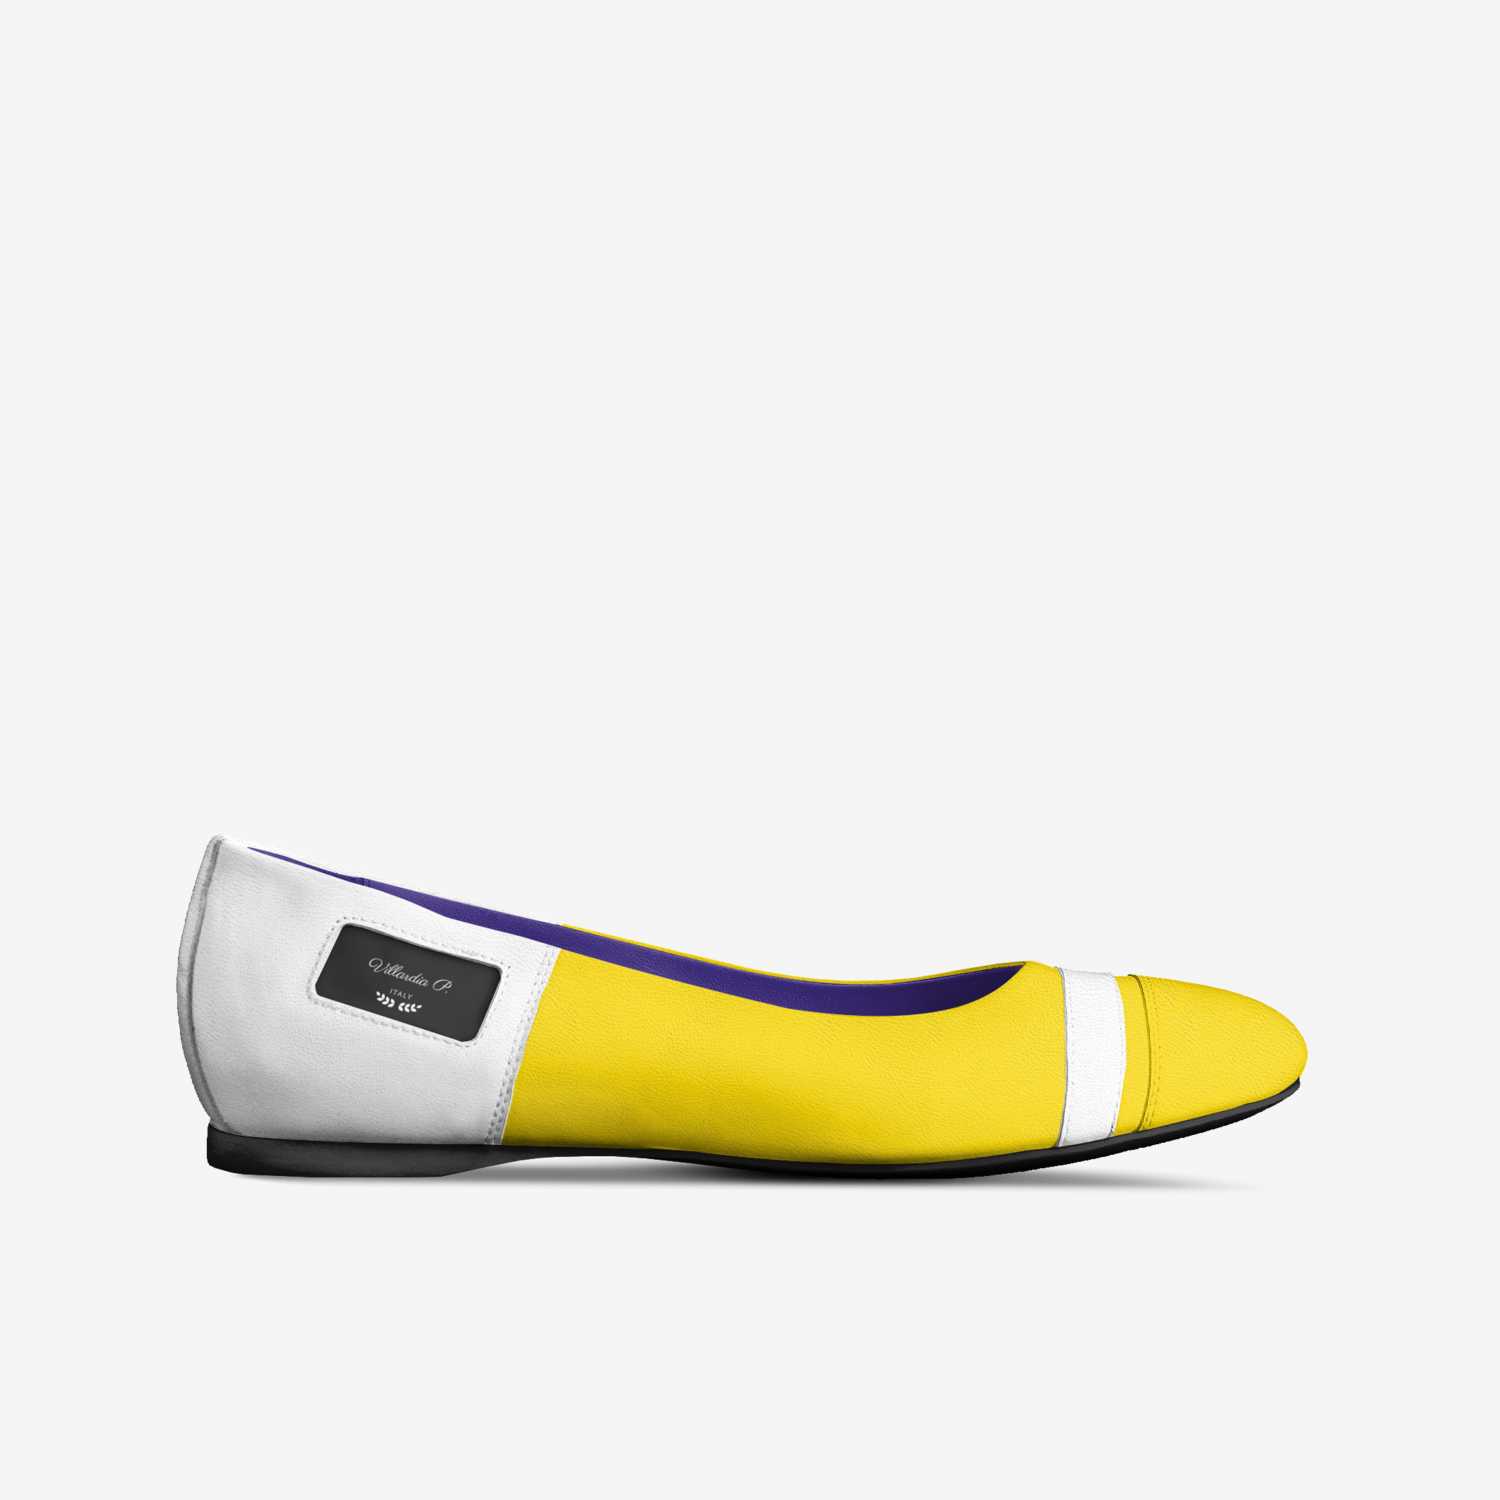 Villardia custom made in Italy shoes by Villardia Pierre | Side view